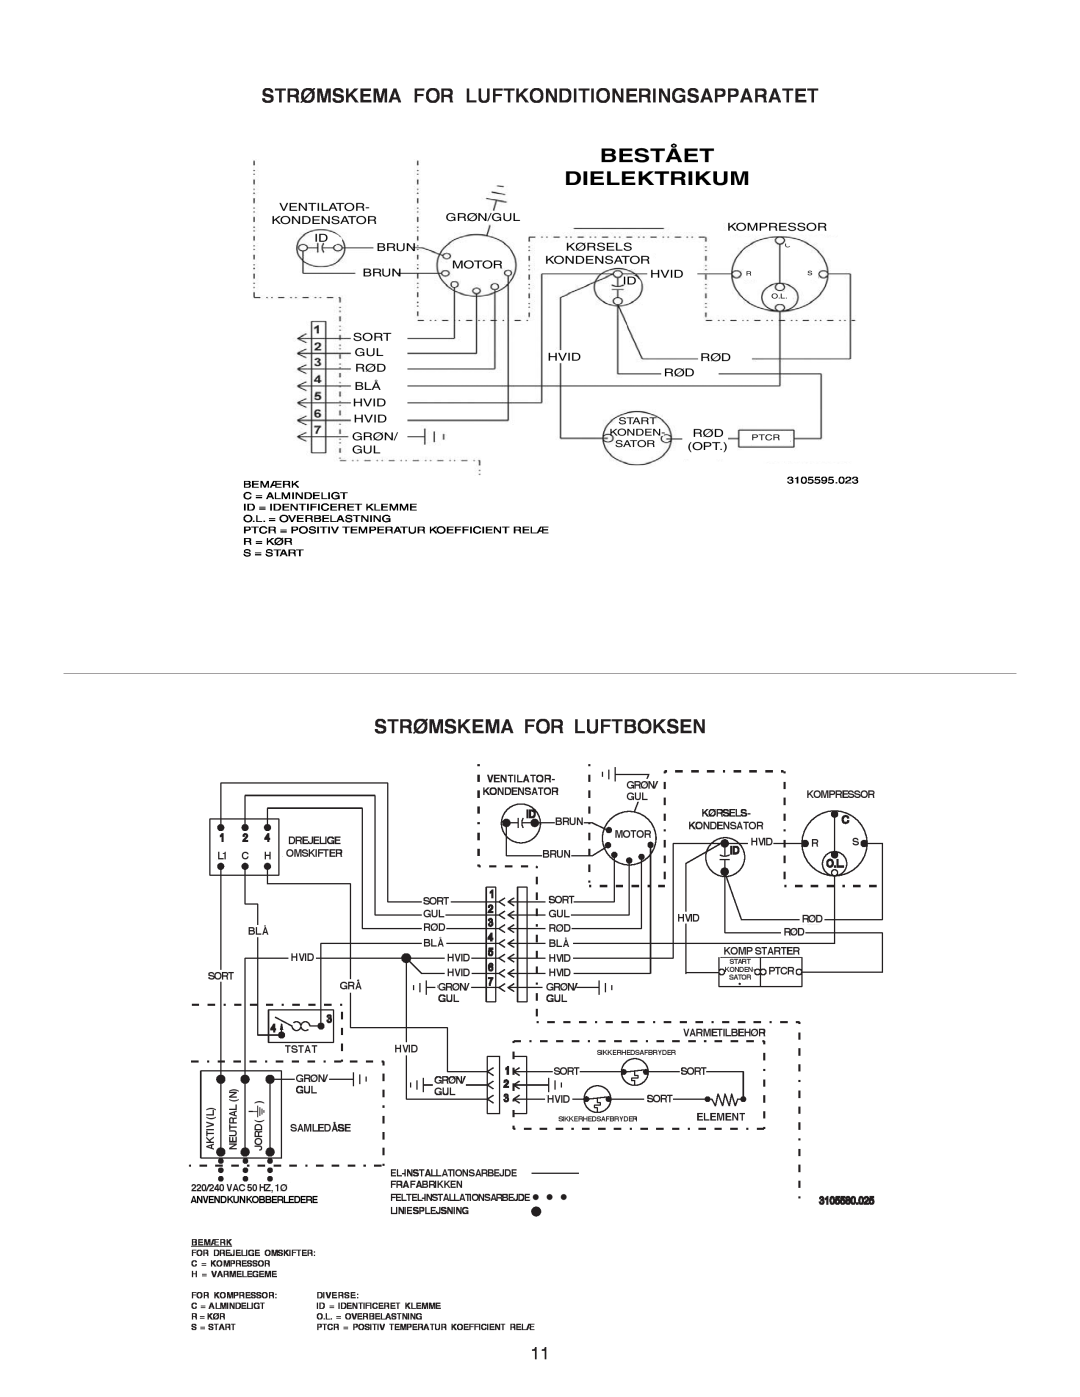 Dometic B3200 manual Strømskema For Luftkonditioneringsapparatet, Strømskema For Luftboksen, Bestået, Dielektrikum 